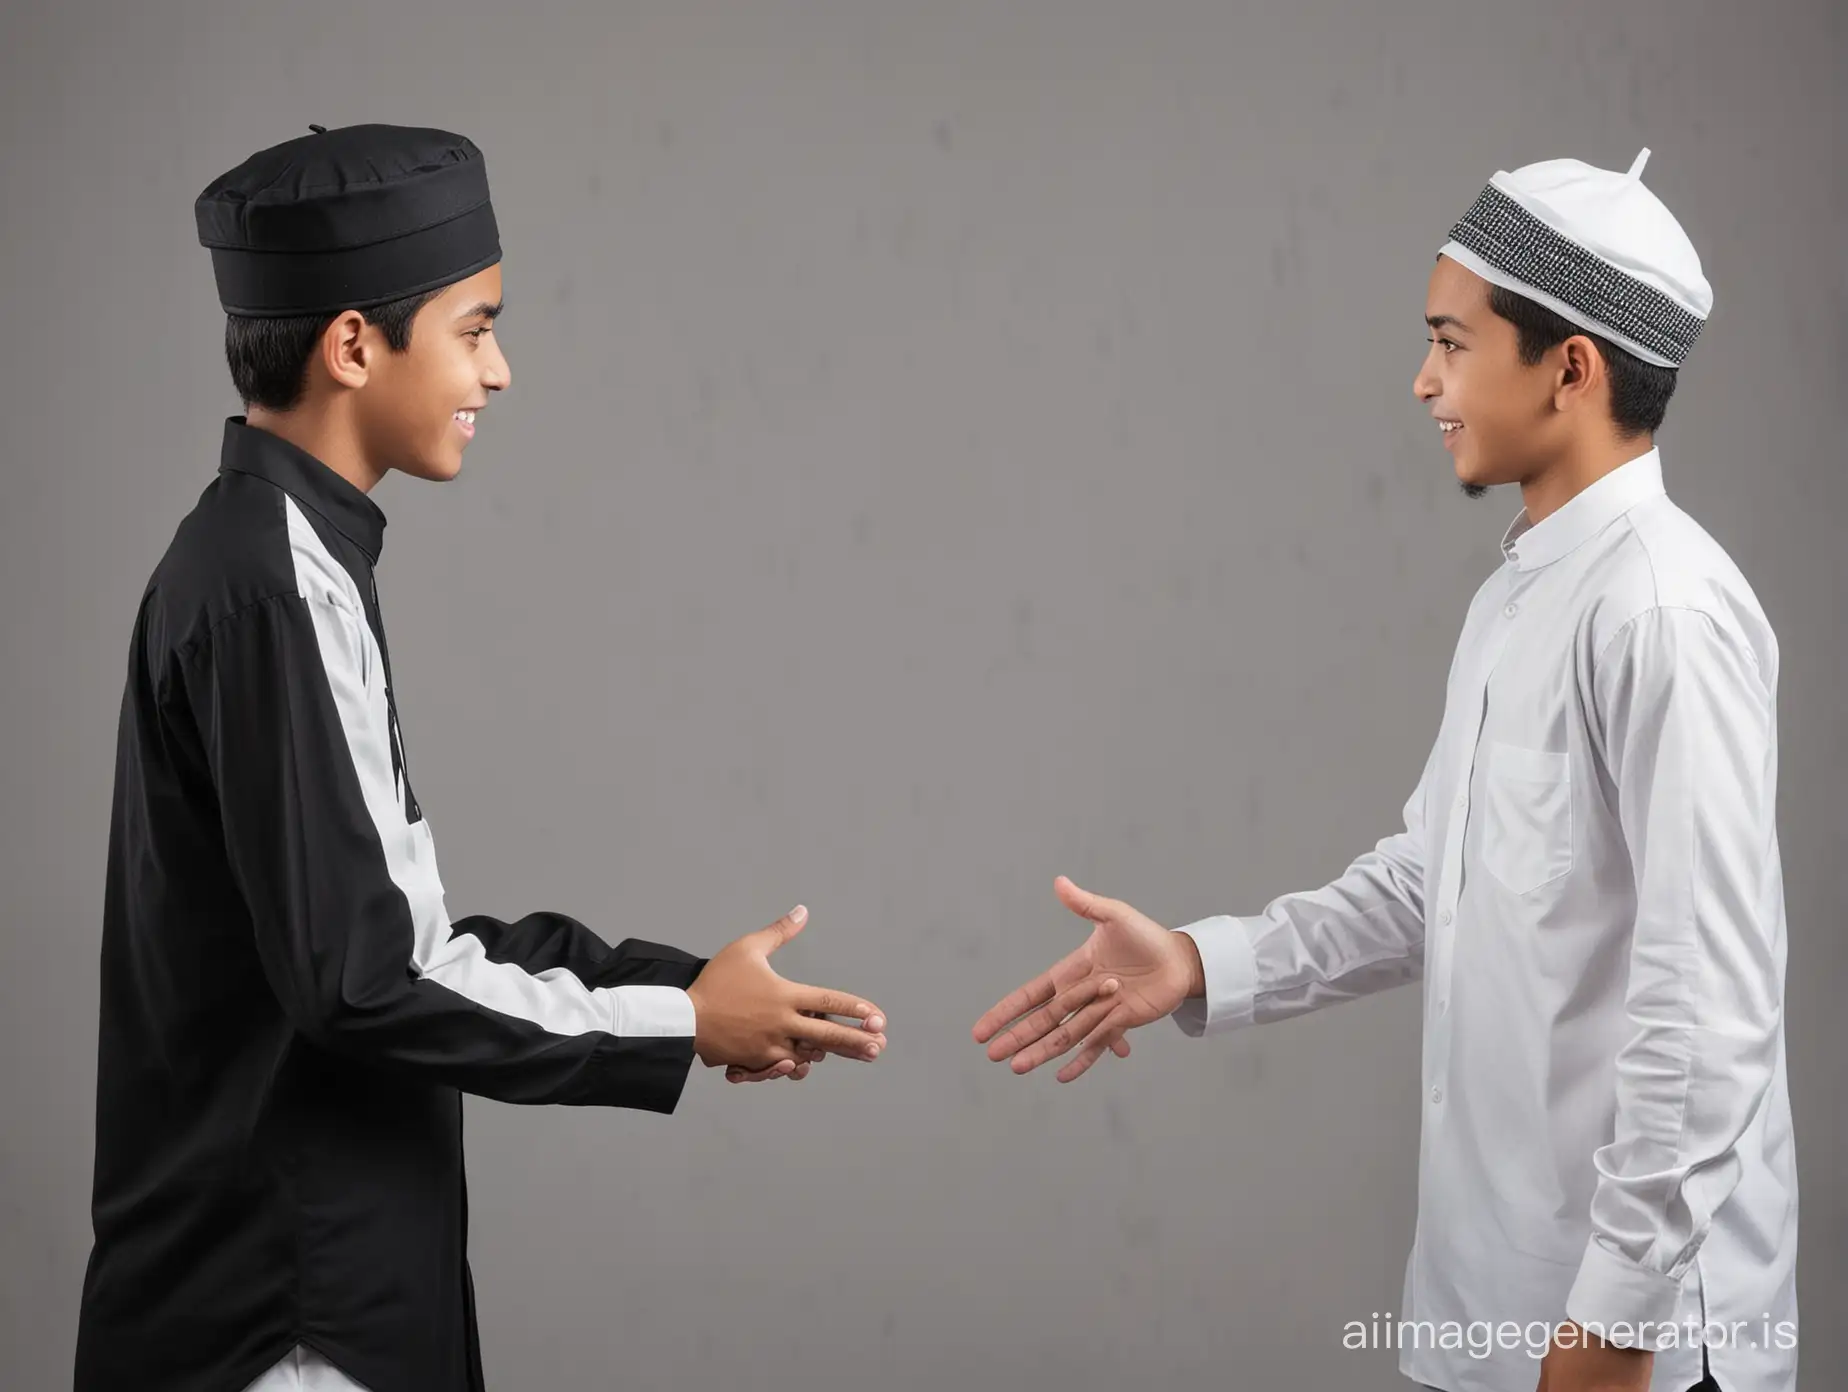 Muslim-Teenage-Boys-in-Black-and-White-Caps-Shake-Hands-in-Forgiveness-Gesture